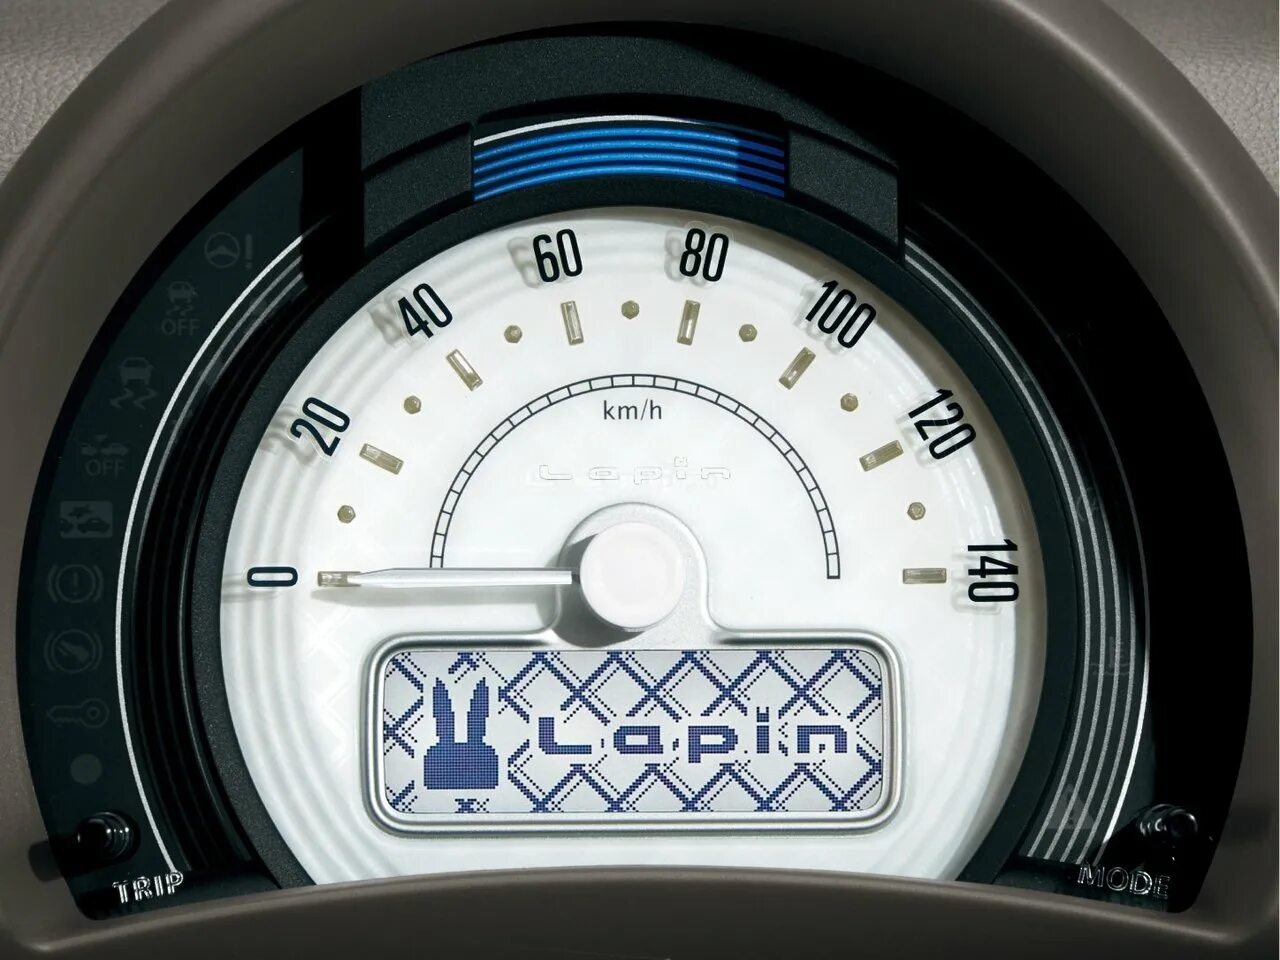 0.7 cvt. Suzuki Alto Lapin 2018. Suzuki Alto Lapin 0.7 CVT. Сузуки Кей панель. Suzuki Alto Lapin 0.7 CVT двигатель.